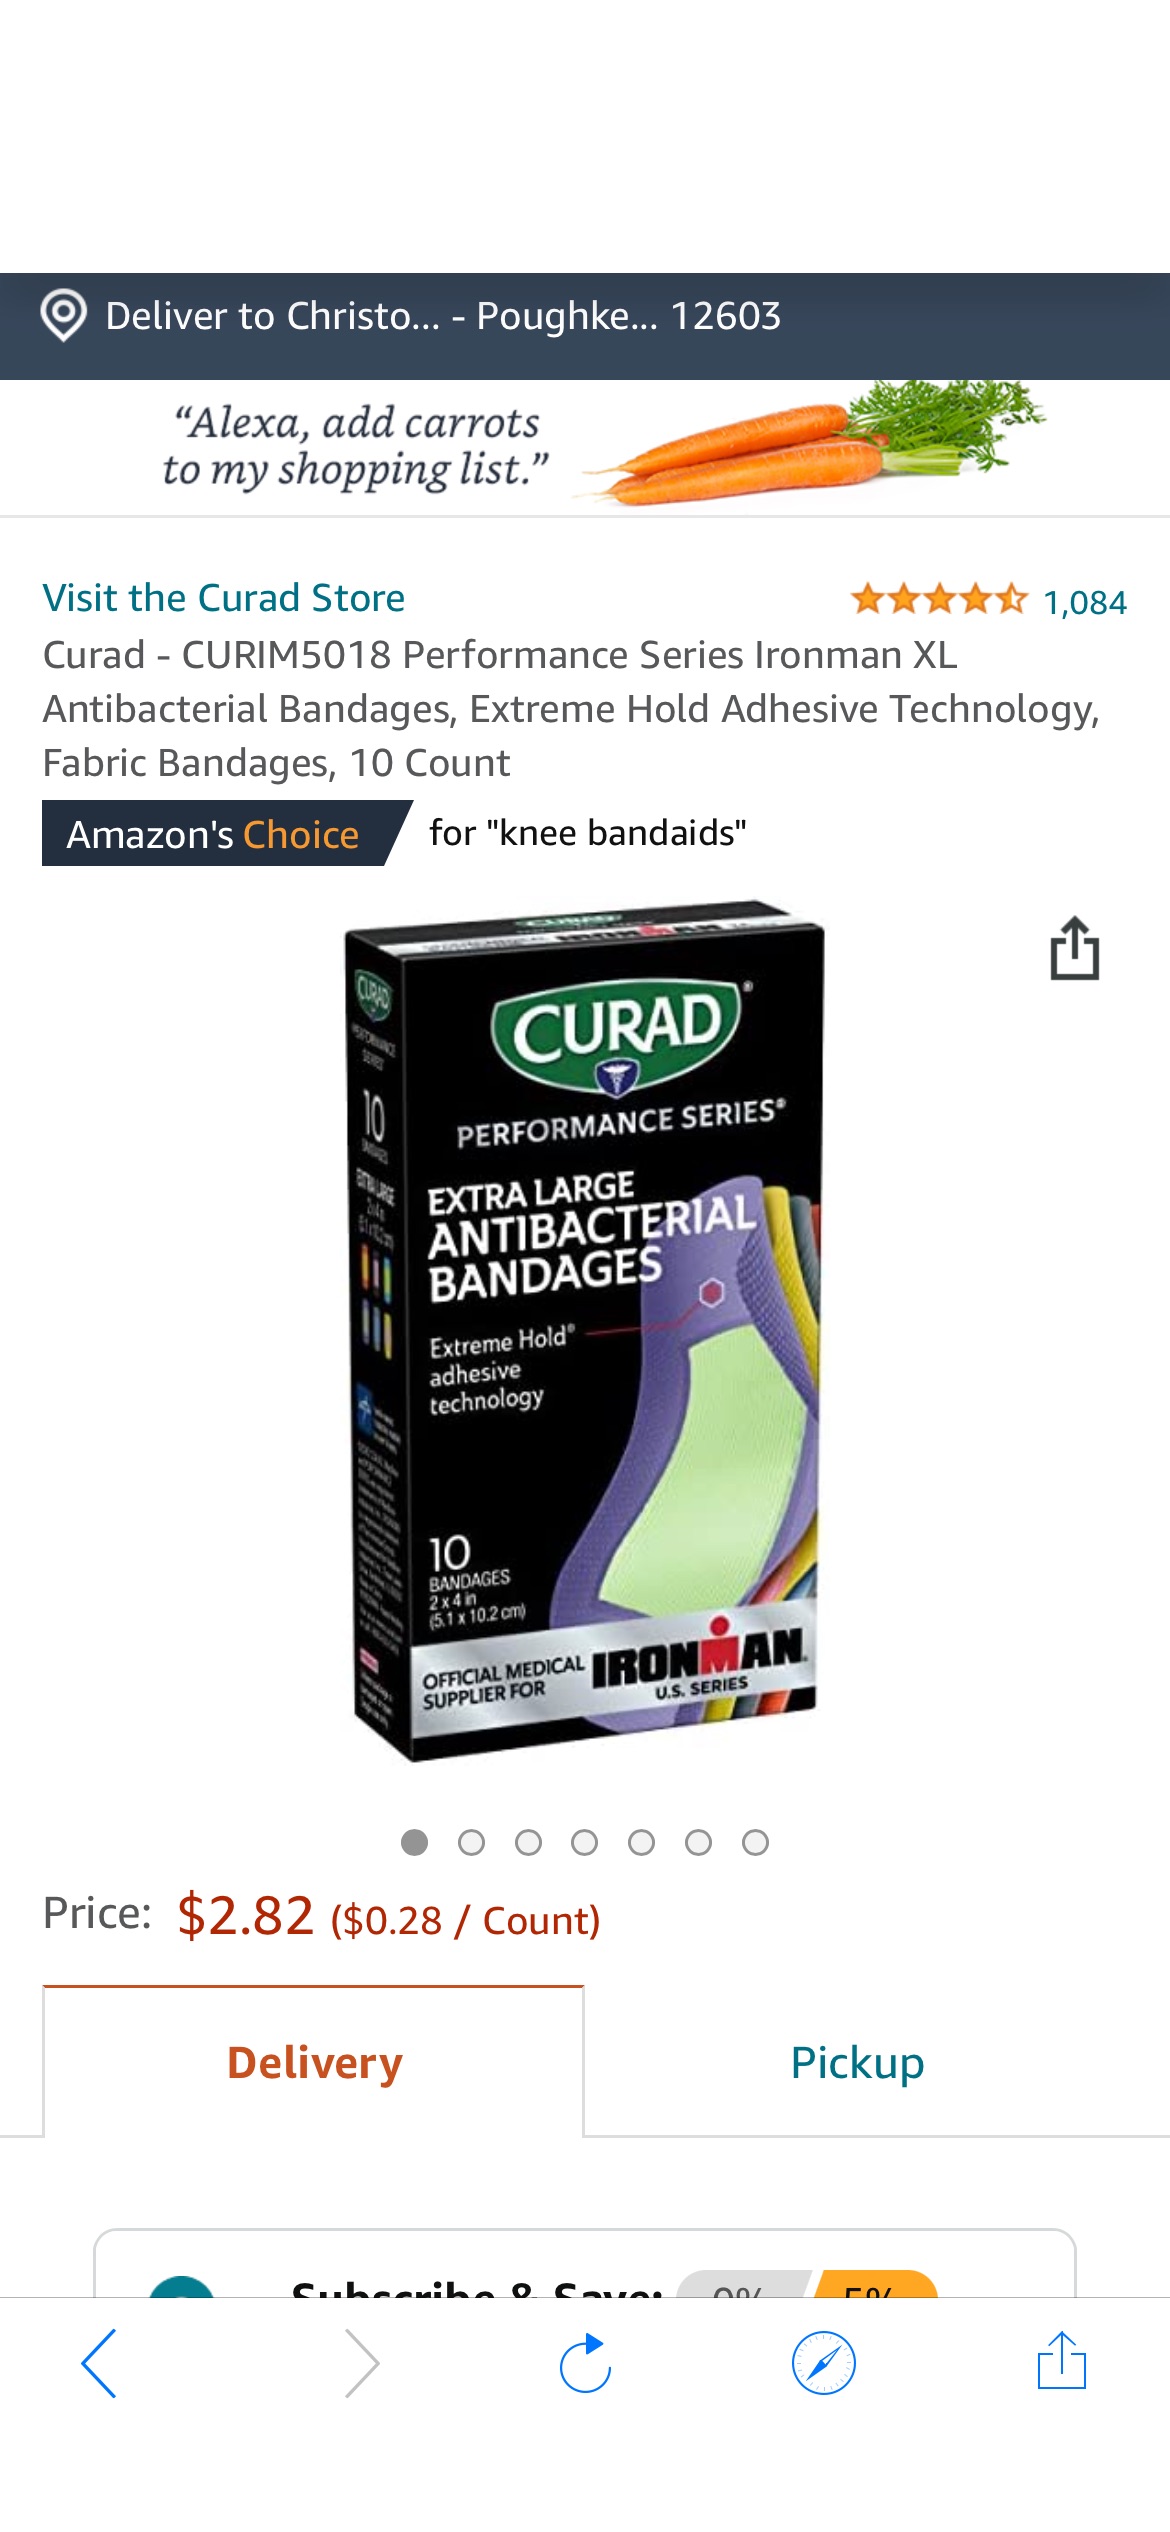 Amazon.com: Curad - CURIM5018 Performance Series Ironman XL Antibacterial Bandages, Extreme Hold创可贴